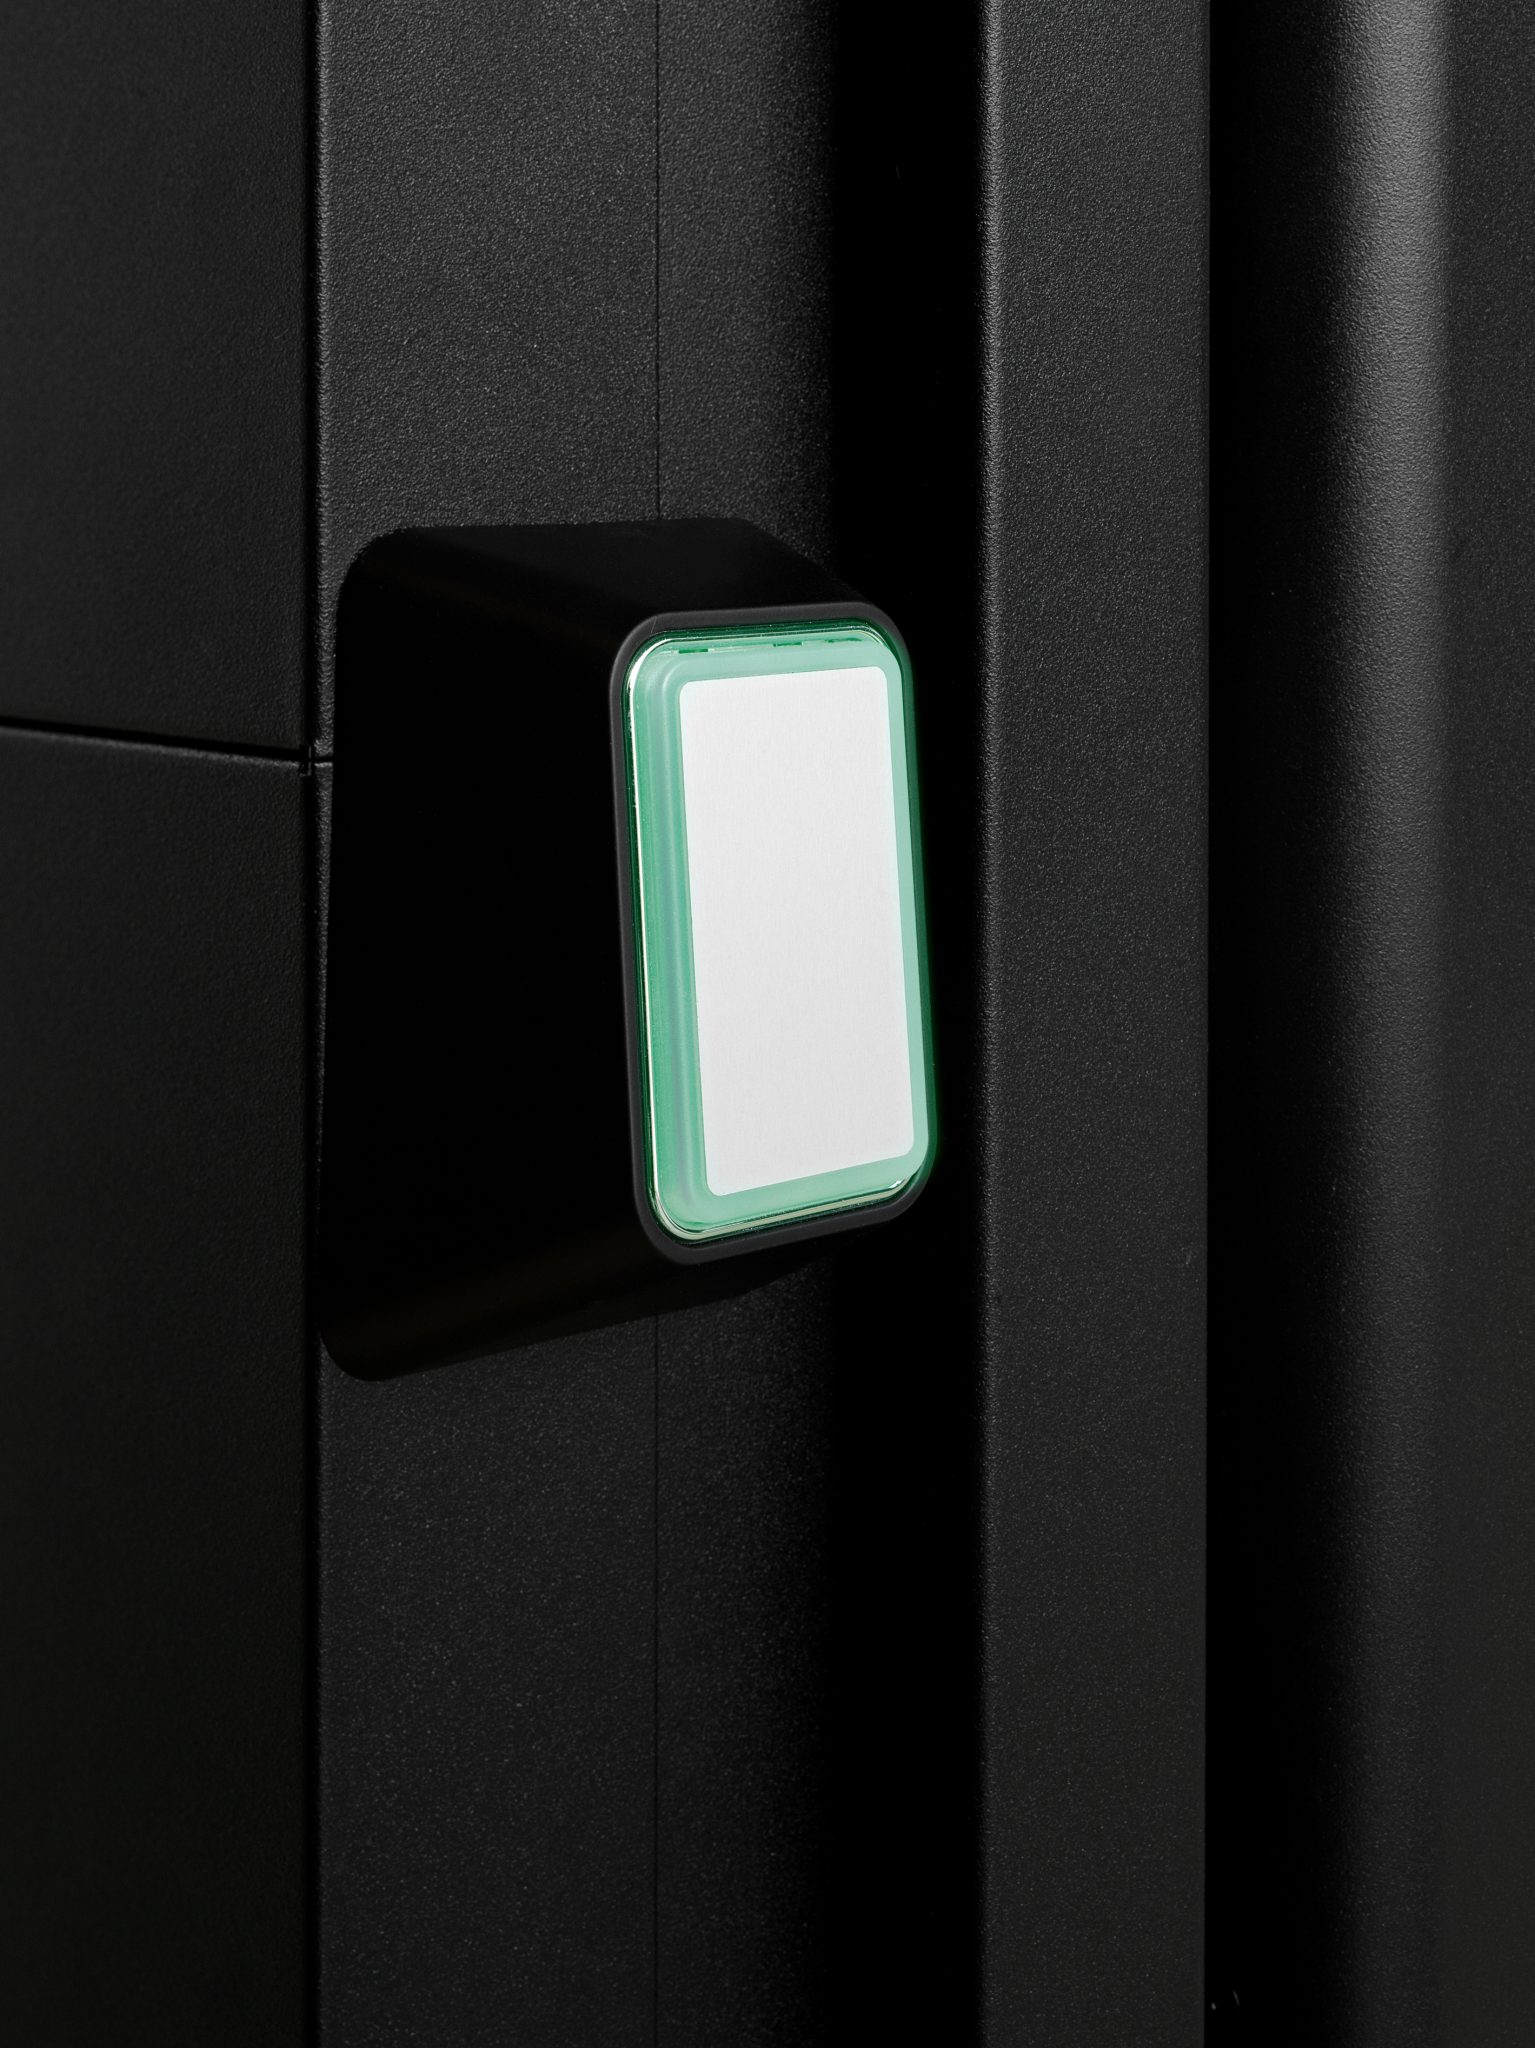 Aritco 4000 home lift key features